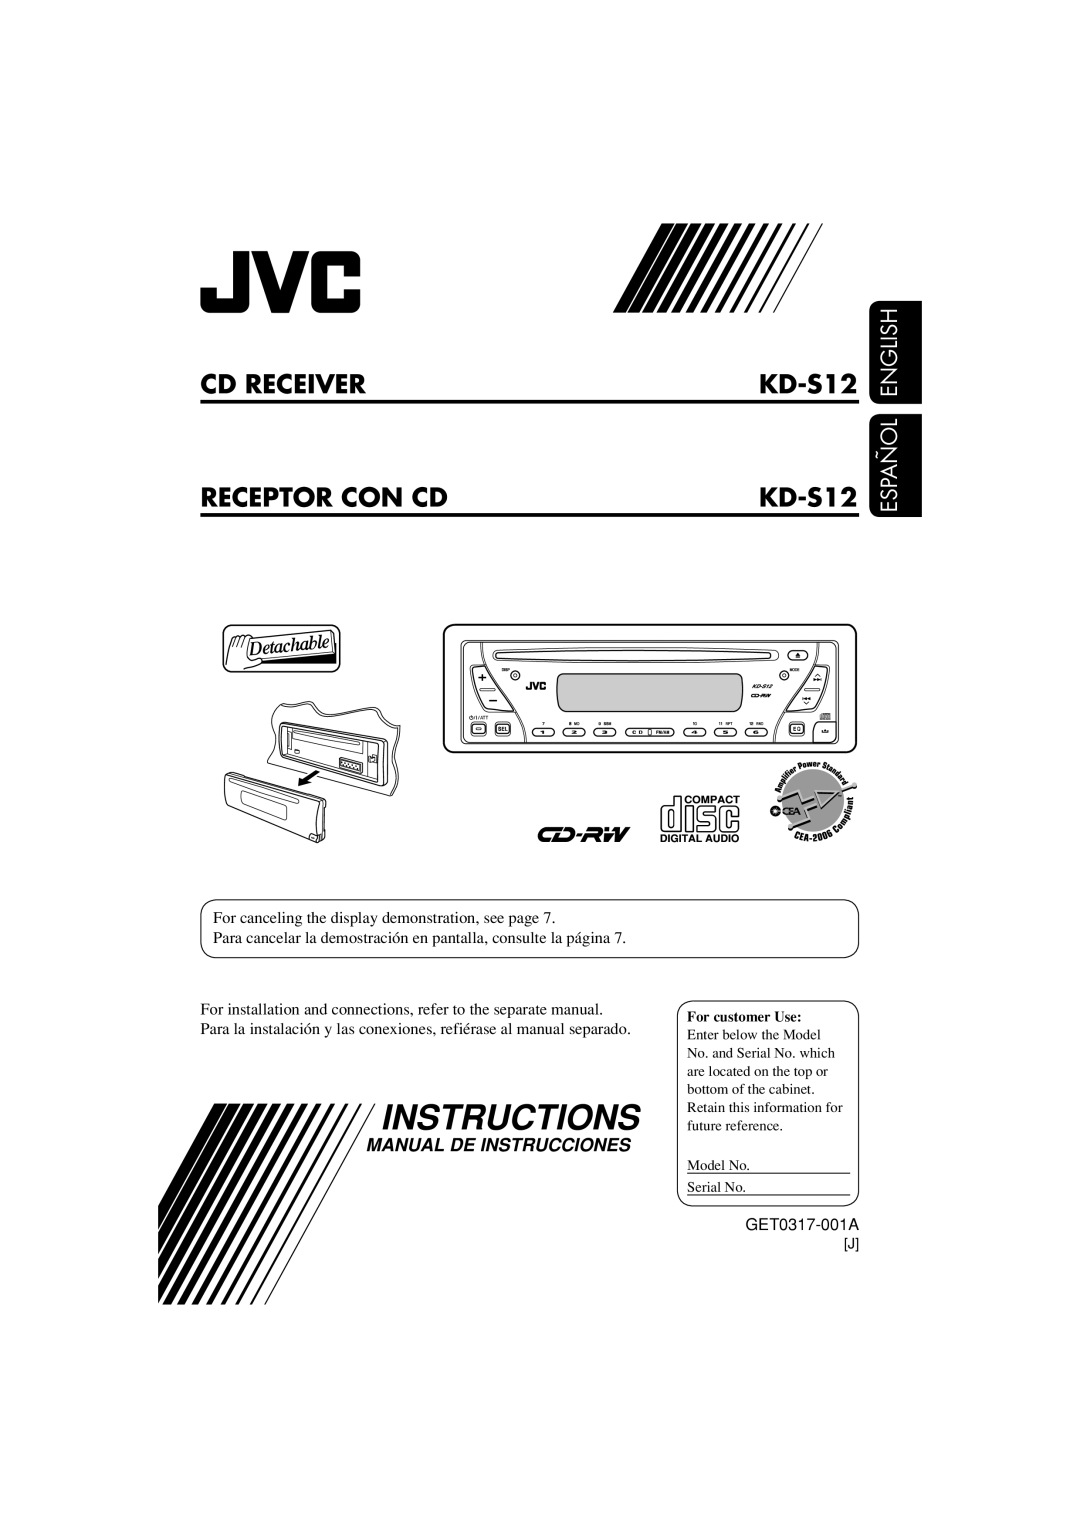 JVC manual Cd Receiver Receptor Con Cd, KD-S12 KD-S12, Español English, Instructions, Manual De Instrucciones 